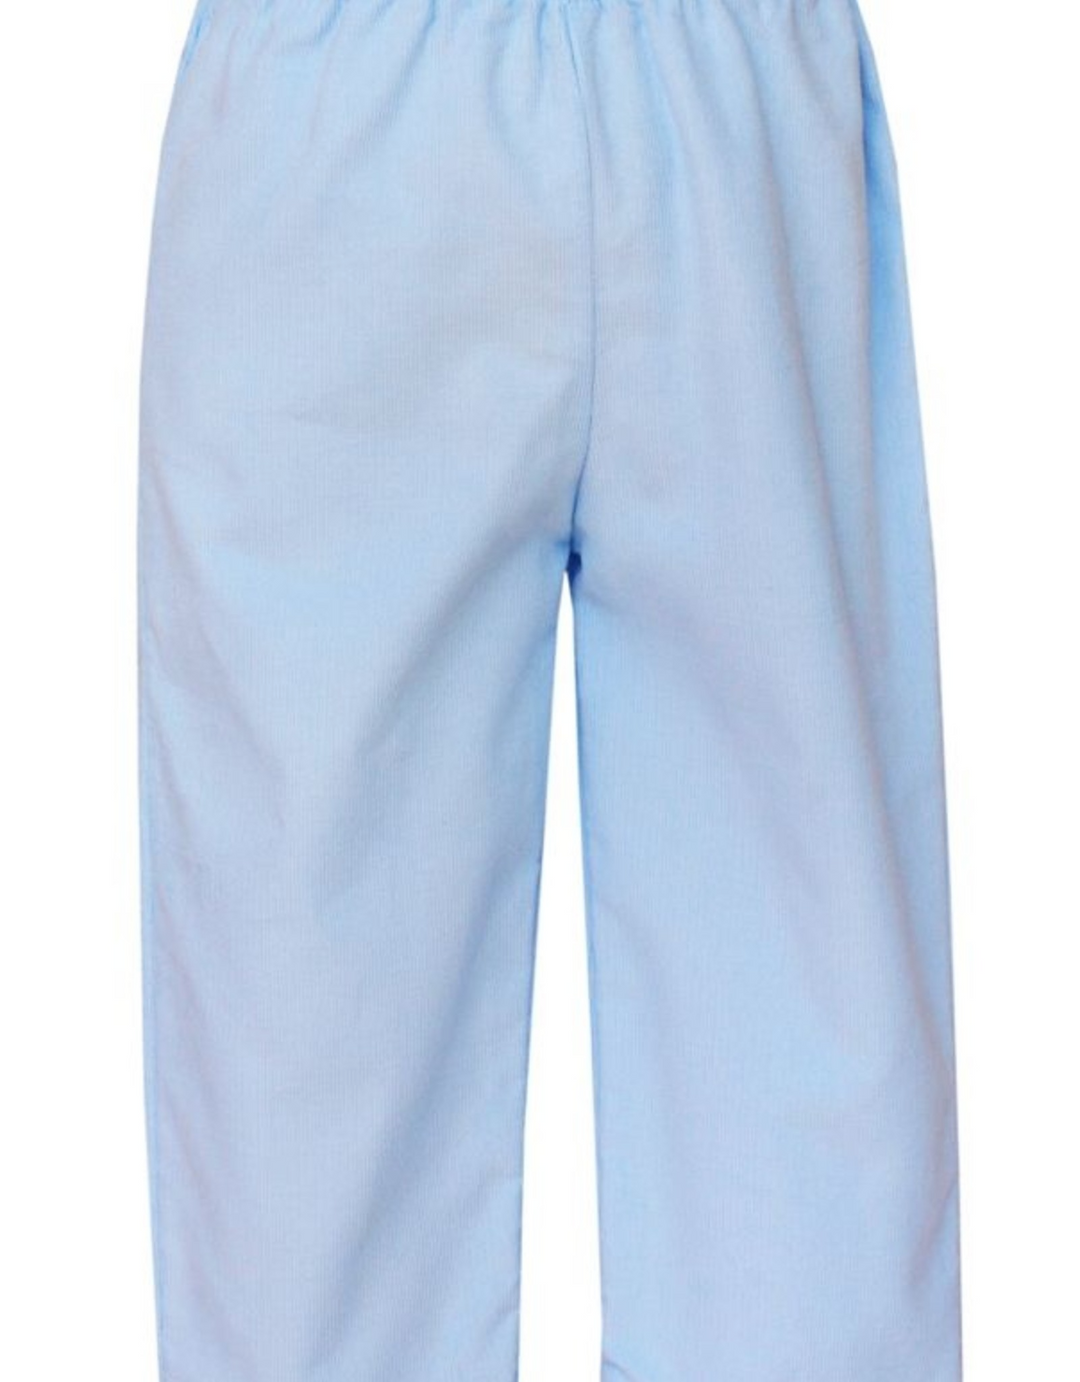 Anavini Corduroy pants- light blue